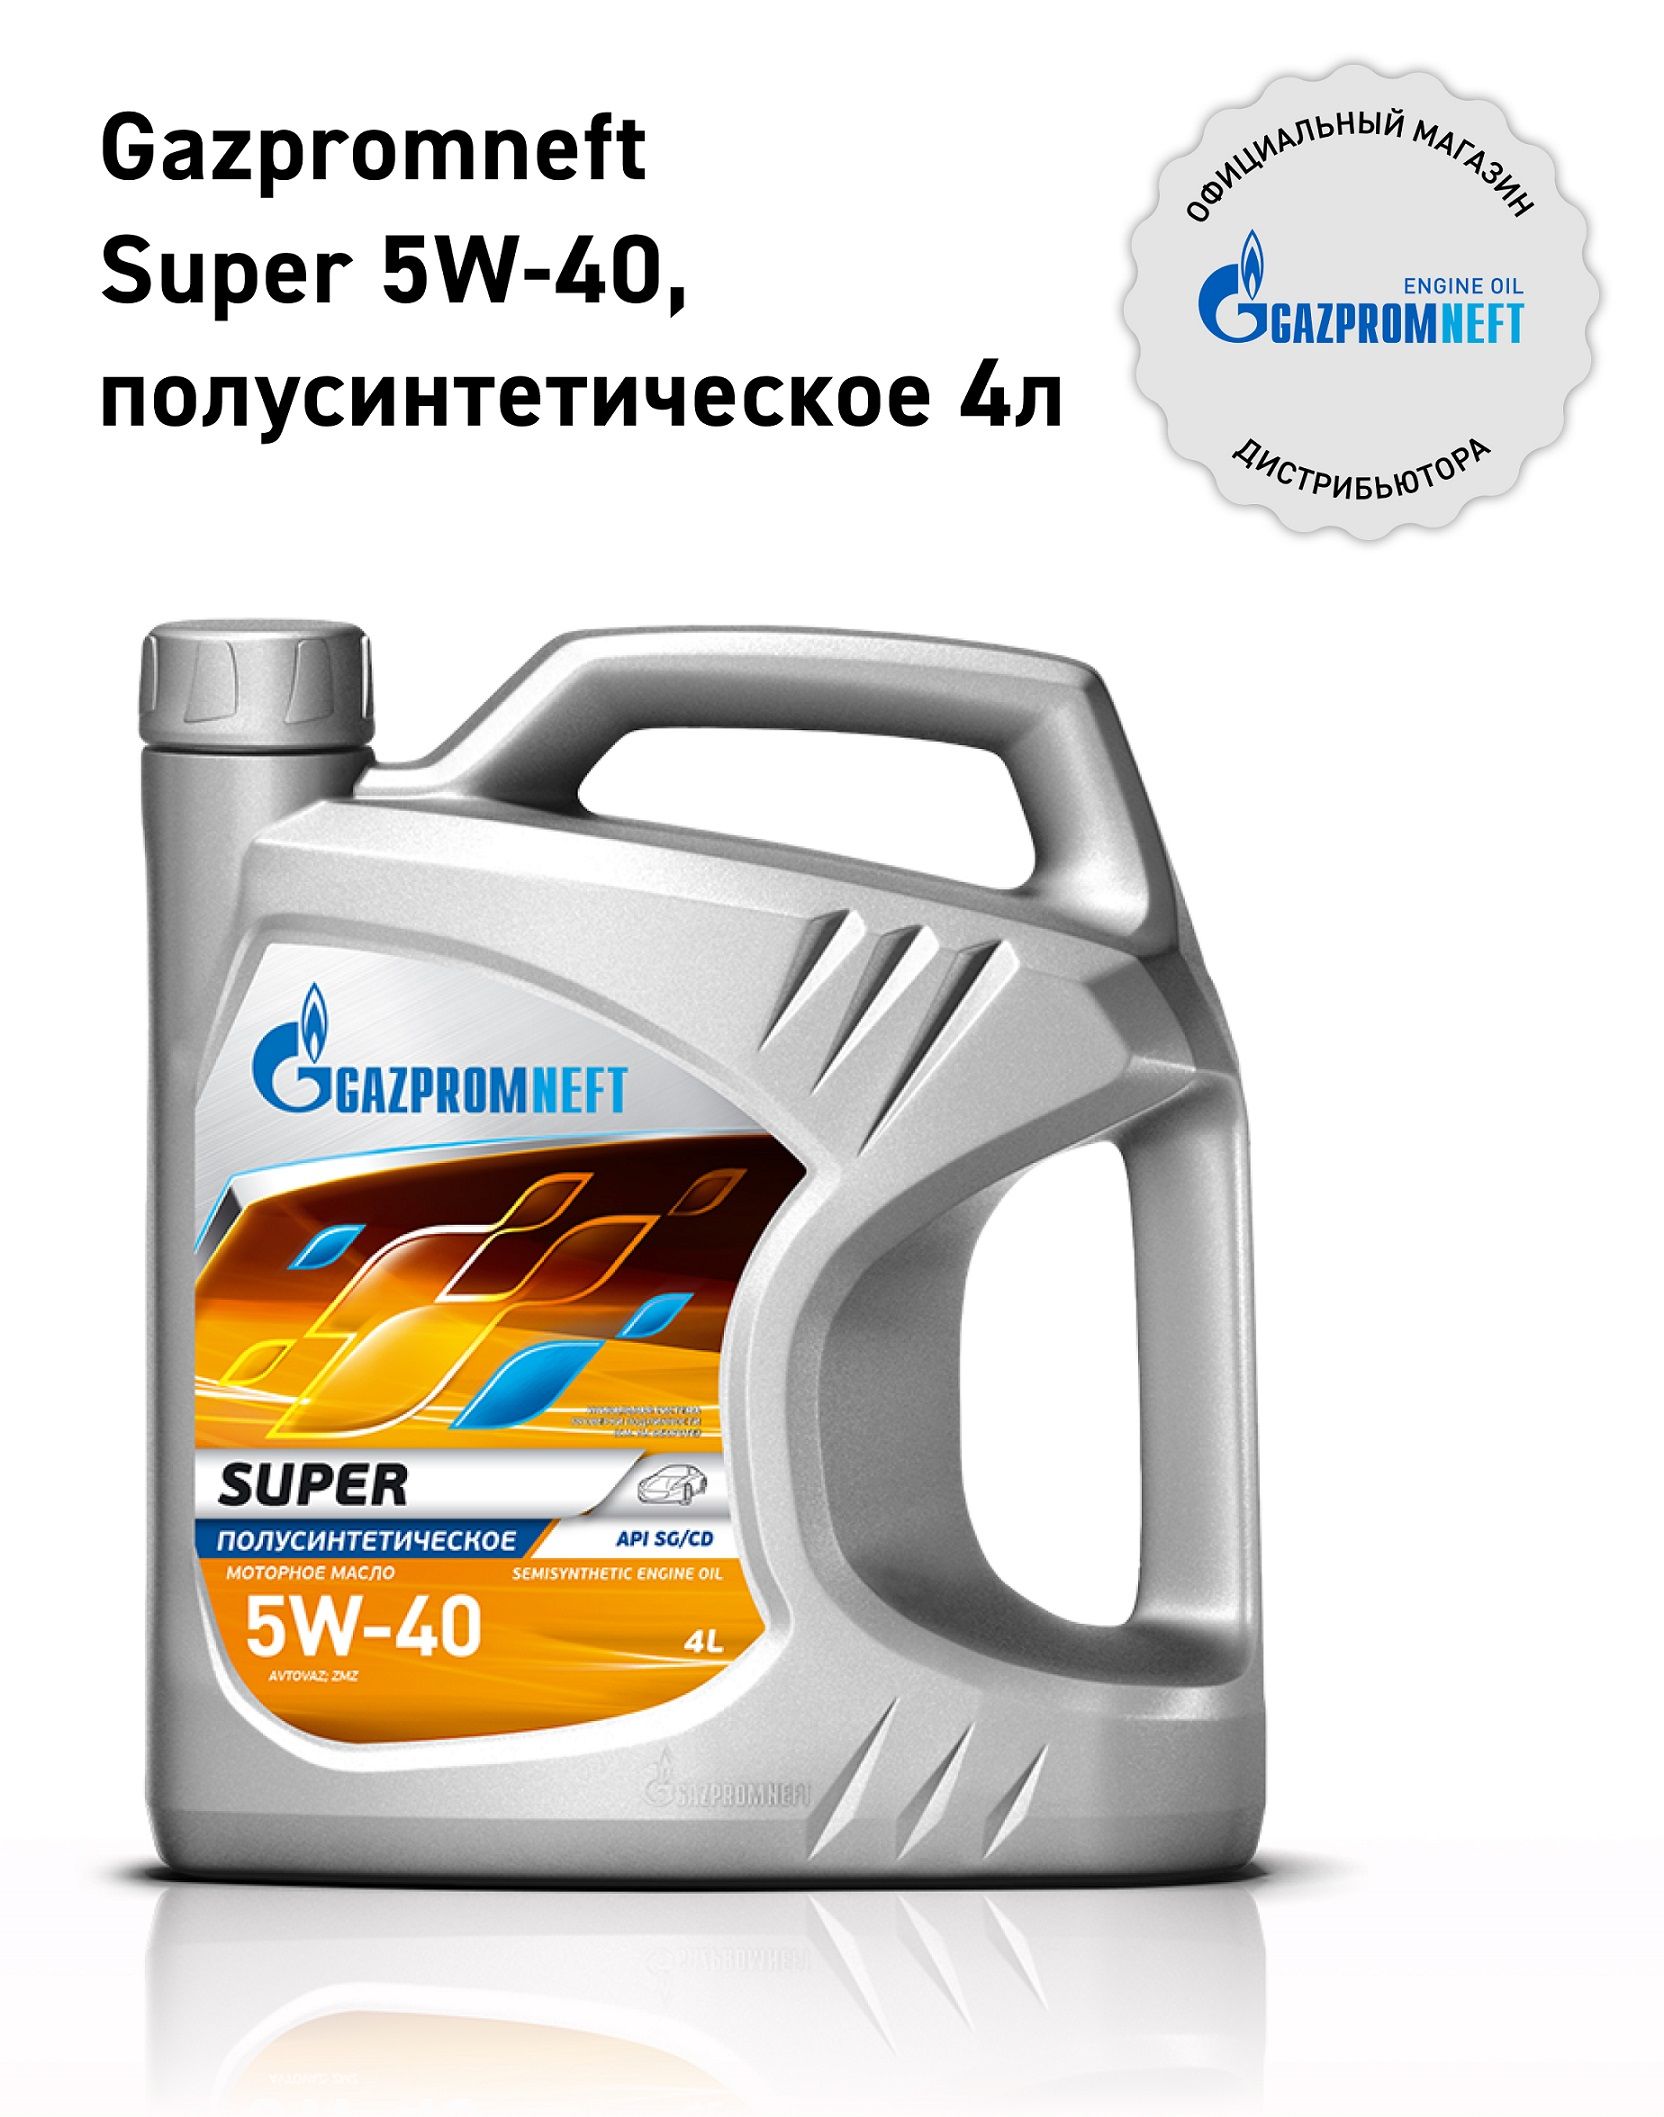 GazpromneftSuper5W-40,Масломоторное,Полусинтетическое,4л